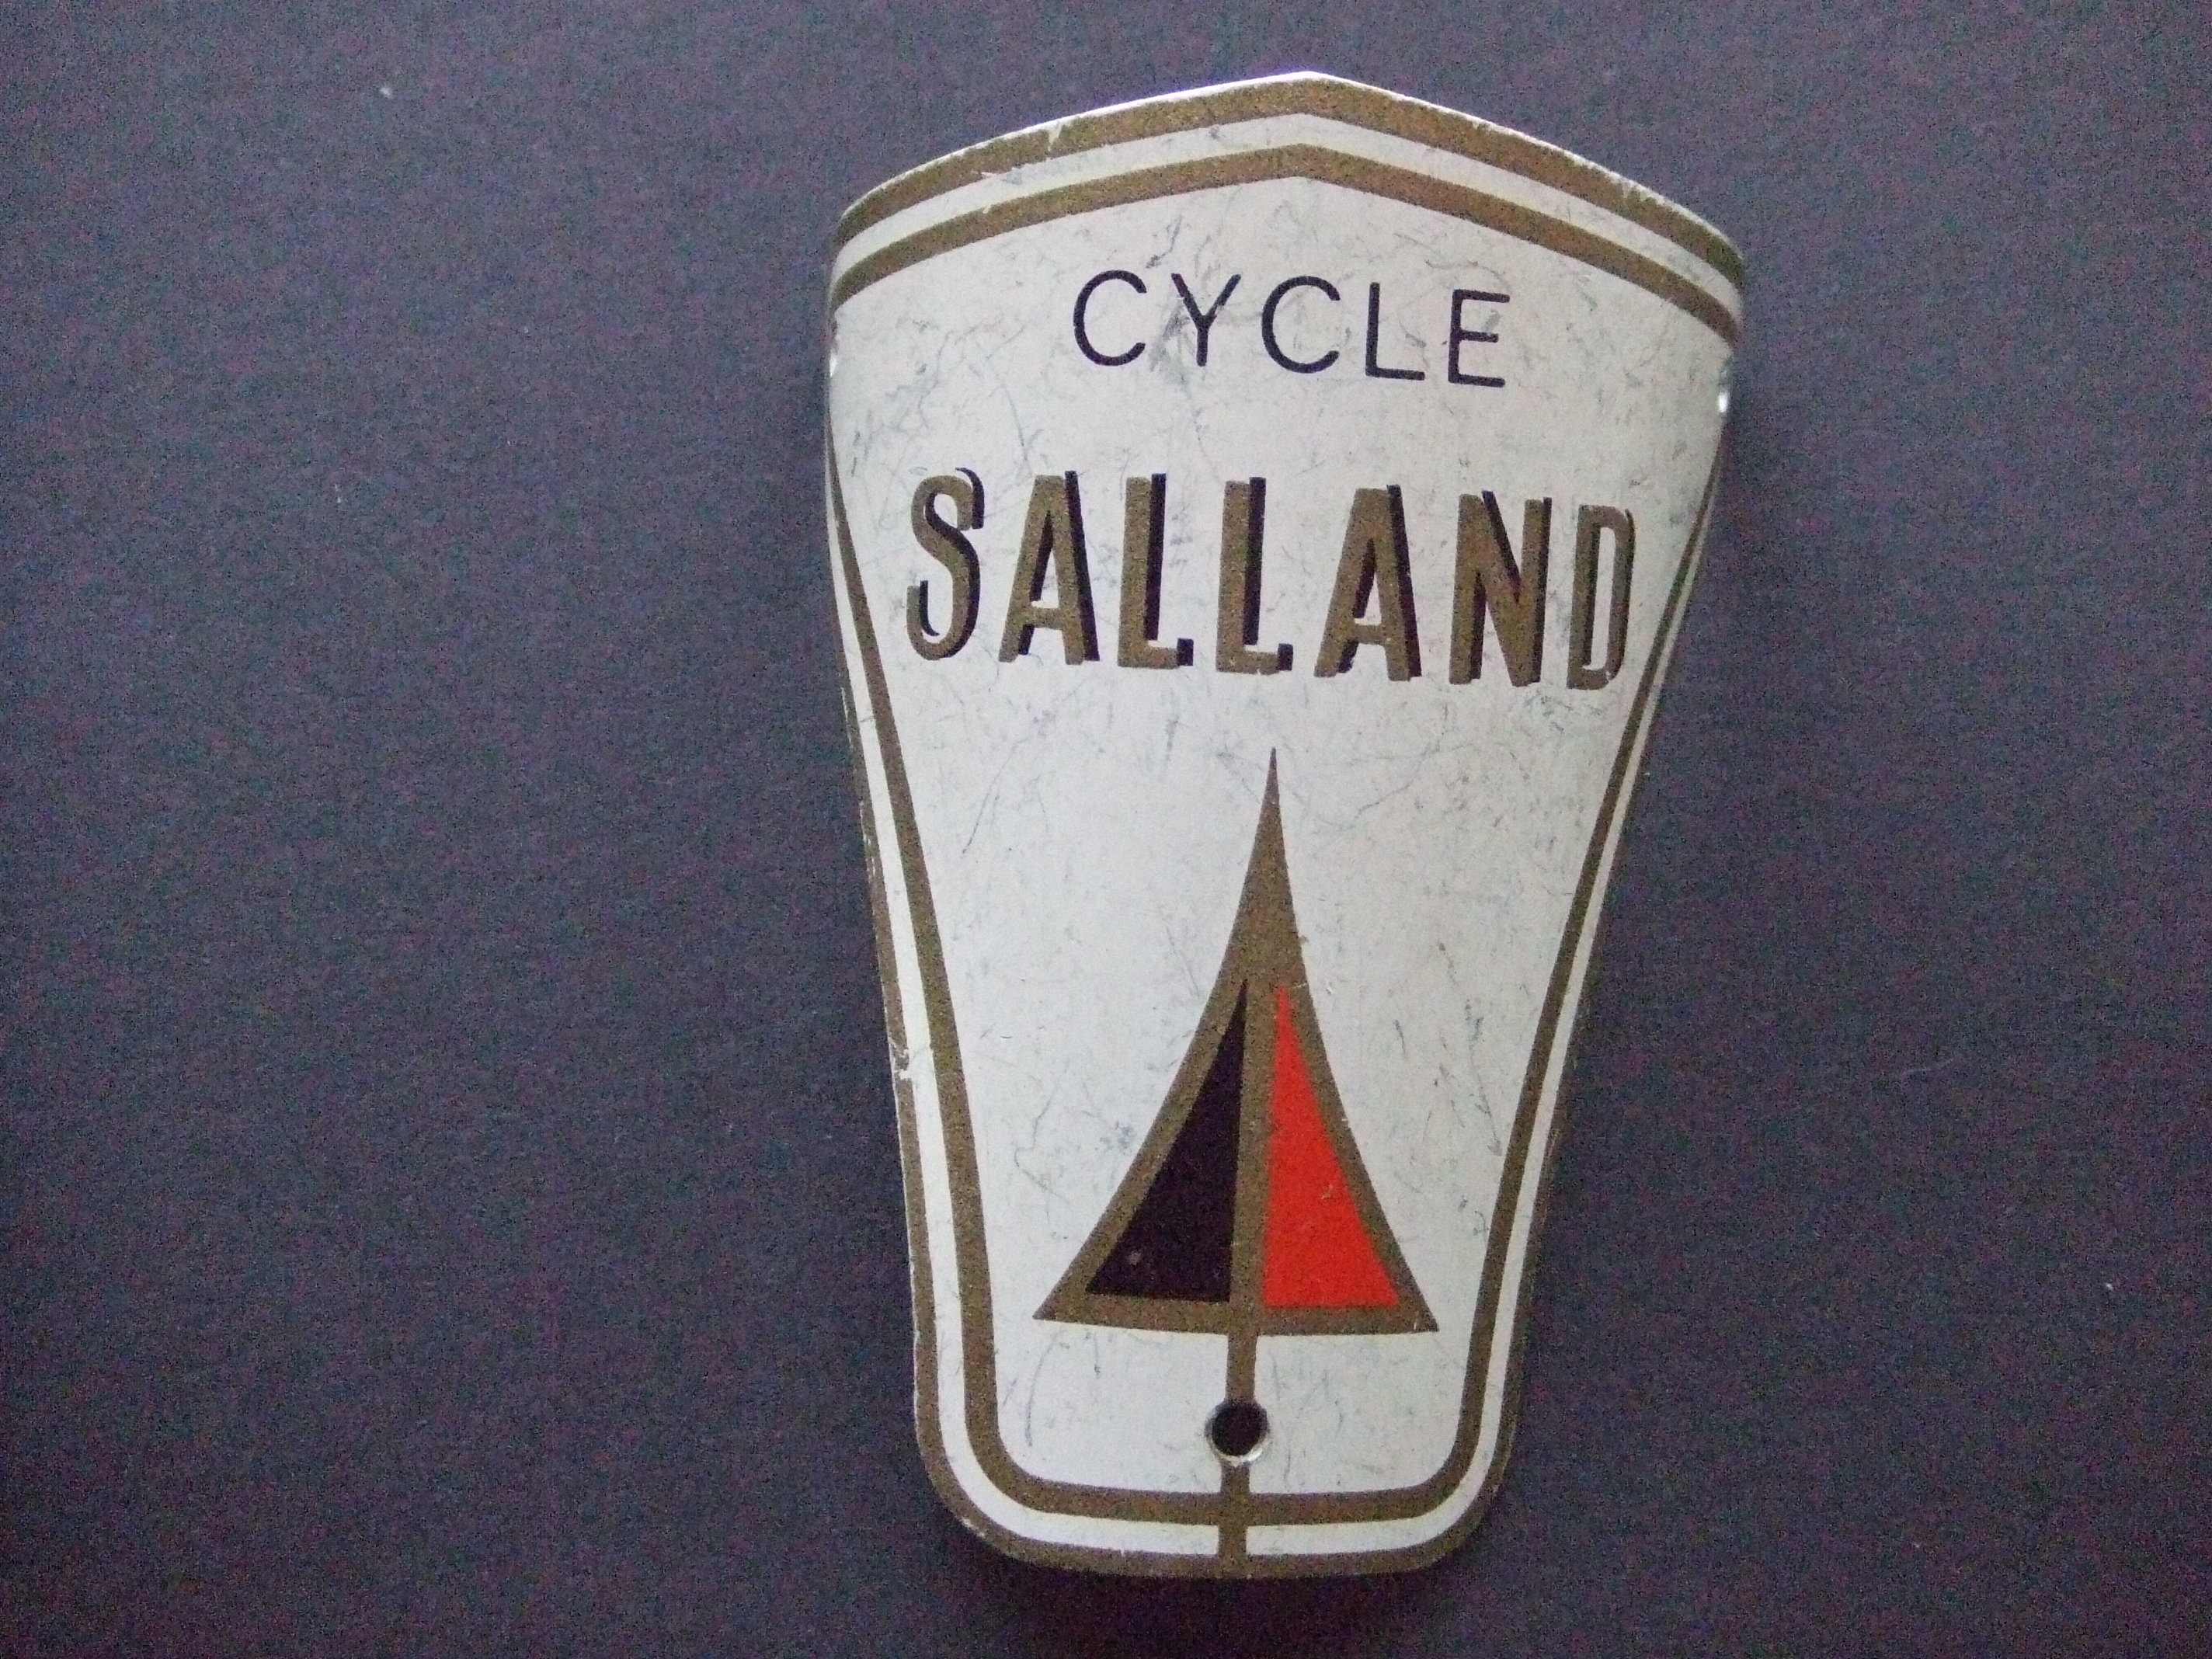 Salland cycles balhoofdplaatje